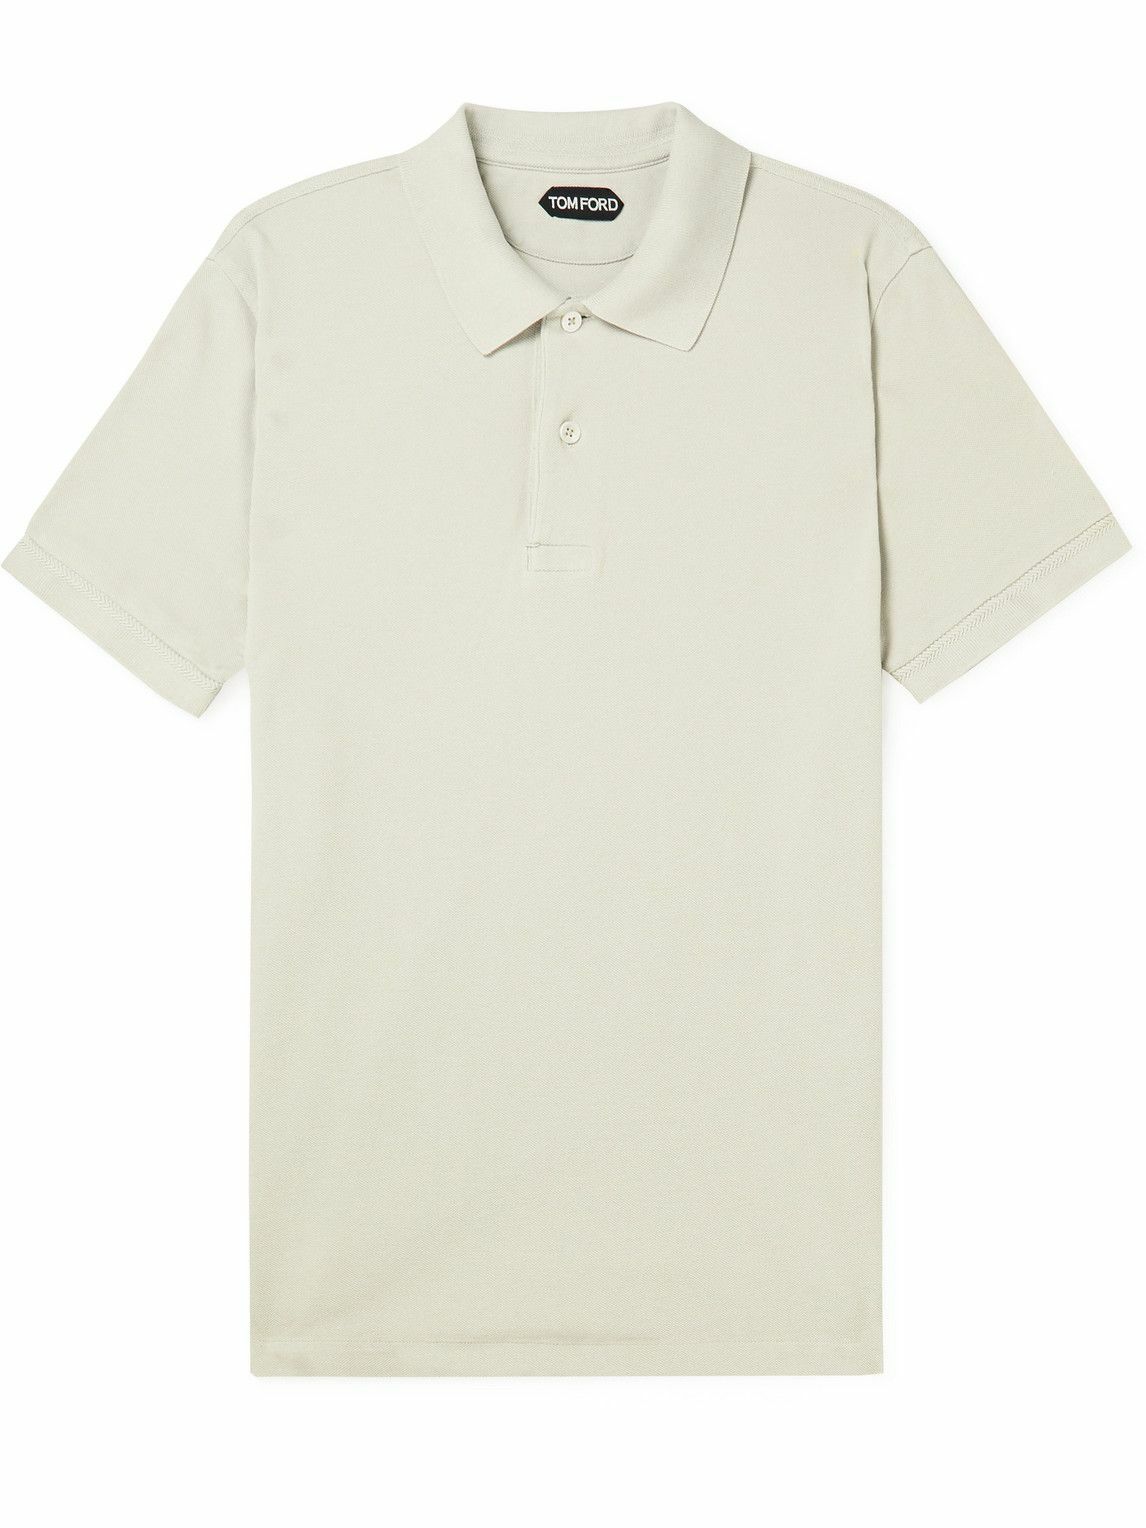 Photo: TOM FORD - Slim-Fit Garment-Dyed Cotton-Piqué Polo Shirt - Gray